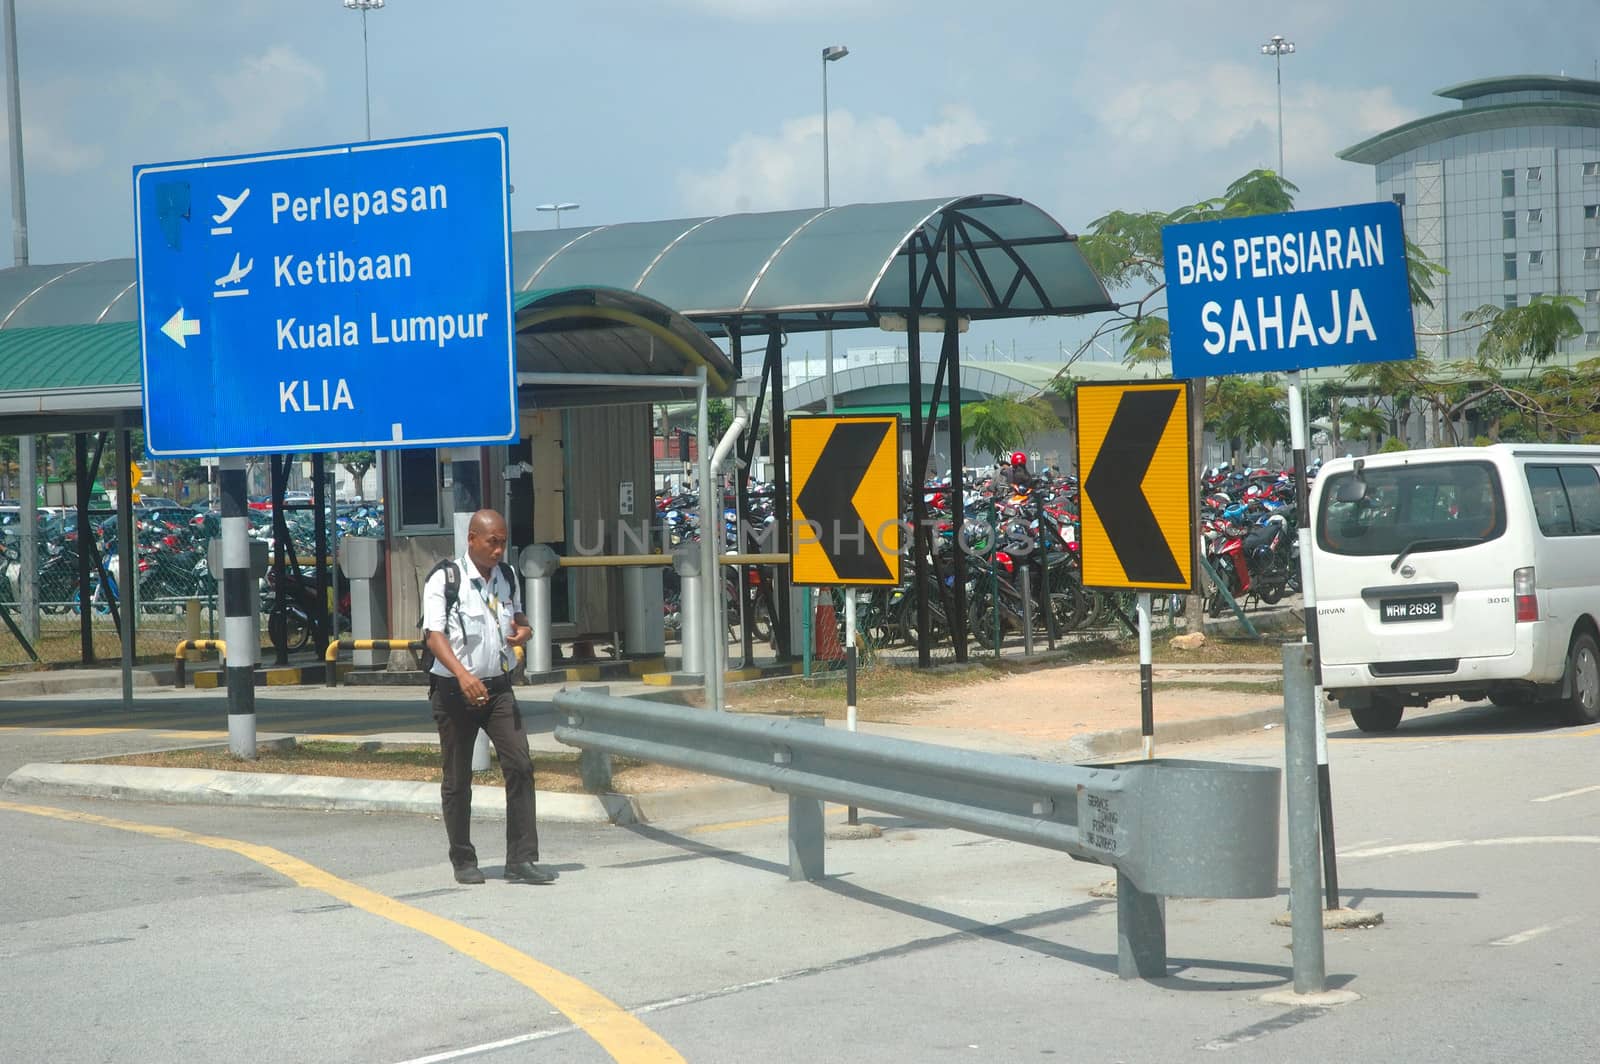 KLCCT, Malaysia - June 7, 2013: Road traffic at Kuala Lumpur Low Cost Carrier Terminal (KLCCT), Malaysia.